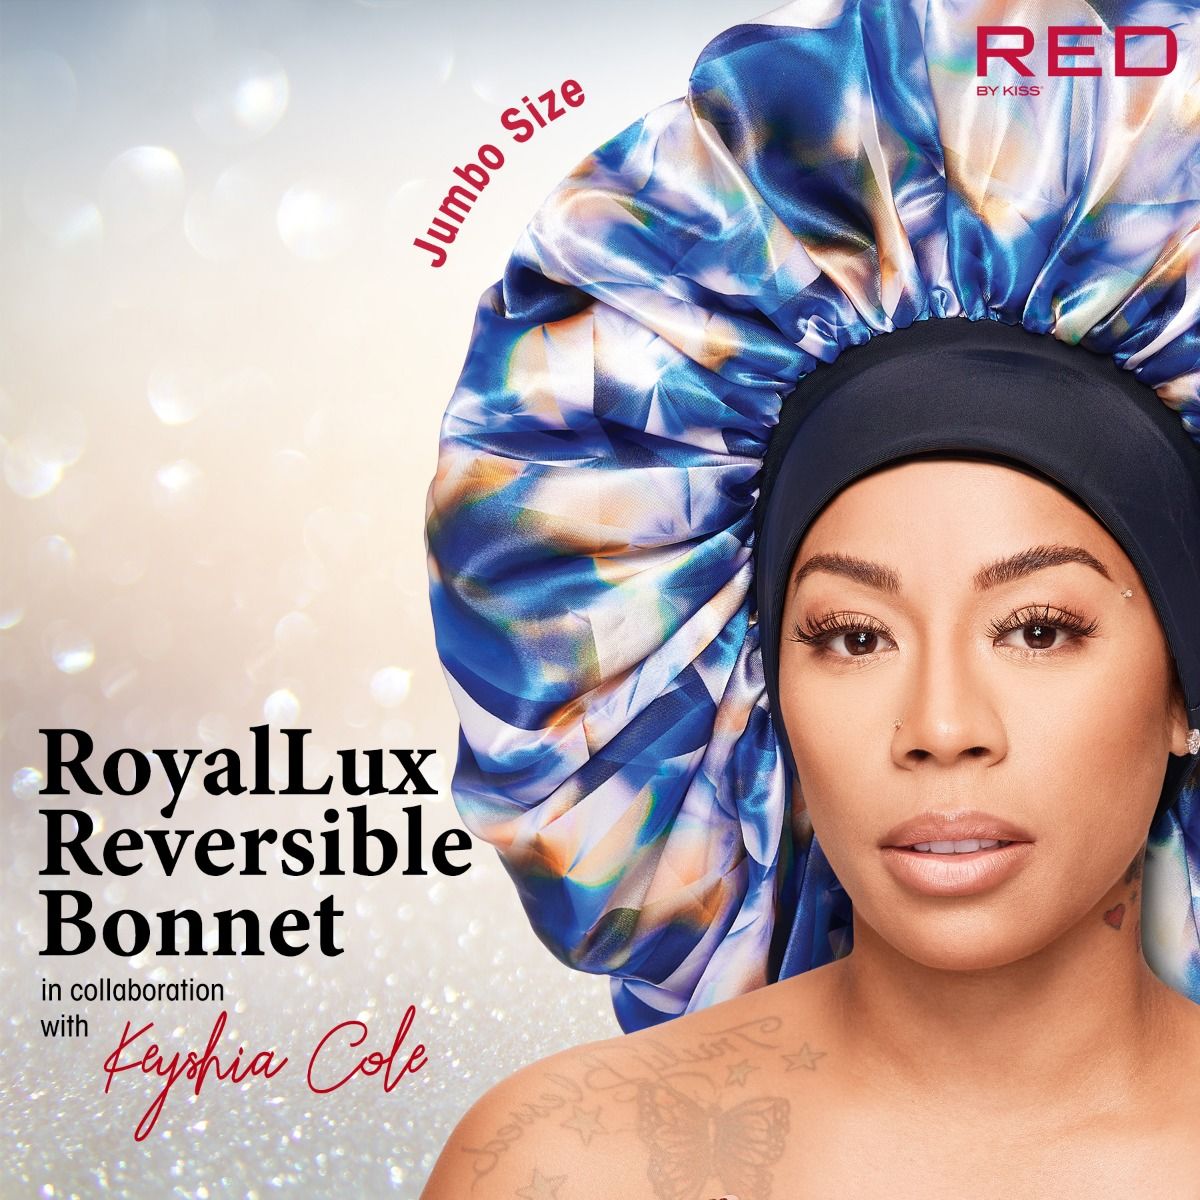 Red by Kiss RoyalLux X Reversible Bonnet Super Jumbo Diamond (HQ76)